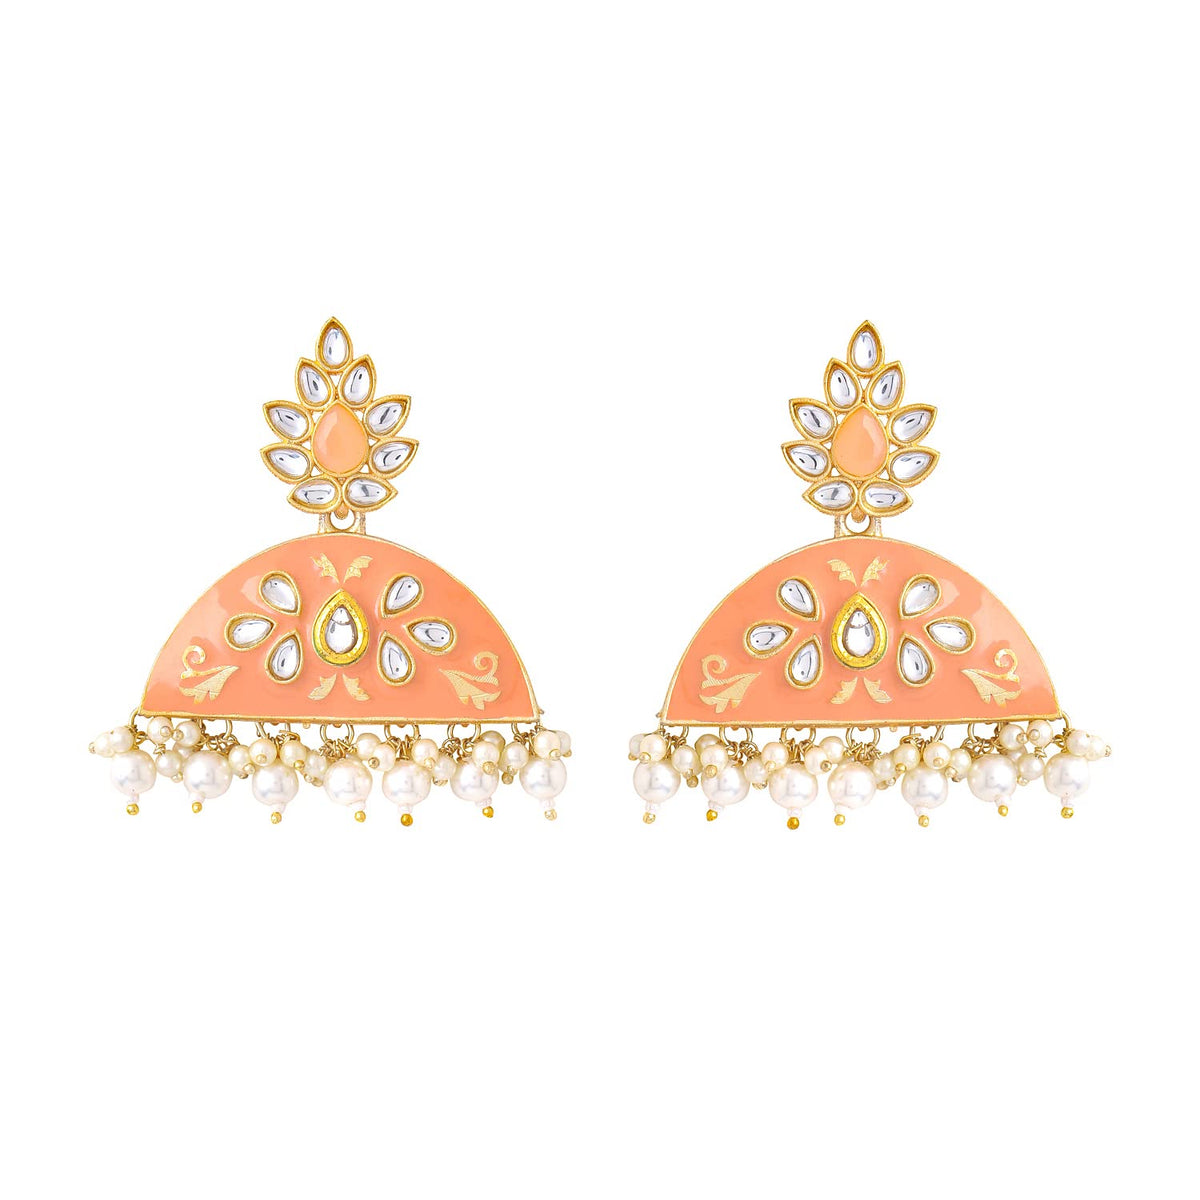 Yellow Chimes Earrings for Women and Girls Meenakari Drop Earrings | Gold Plated Pink Meenakari Drop Earrings | Birthday Gift for girls and women Anniversary Gift for Wife